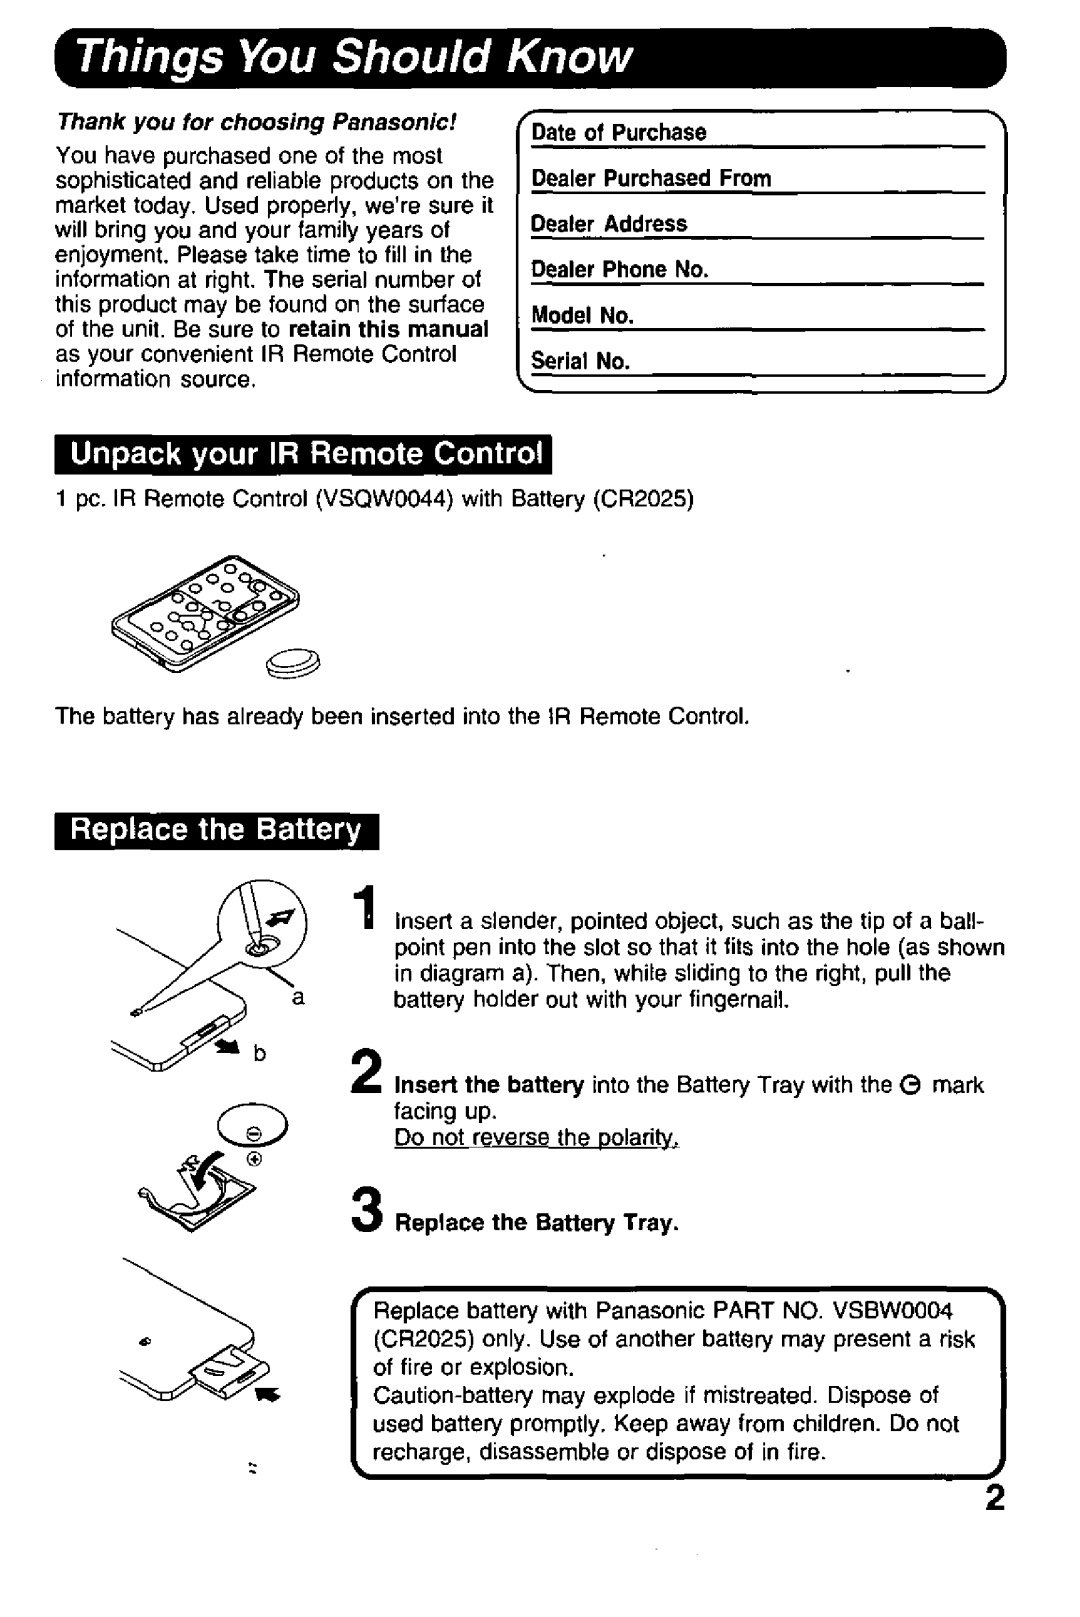 Panasonic PV-DRC9 manual 